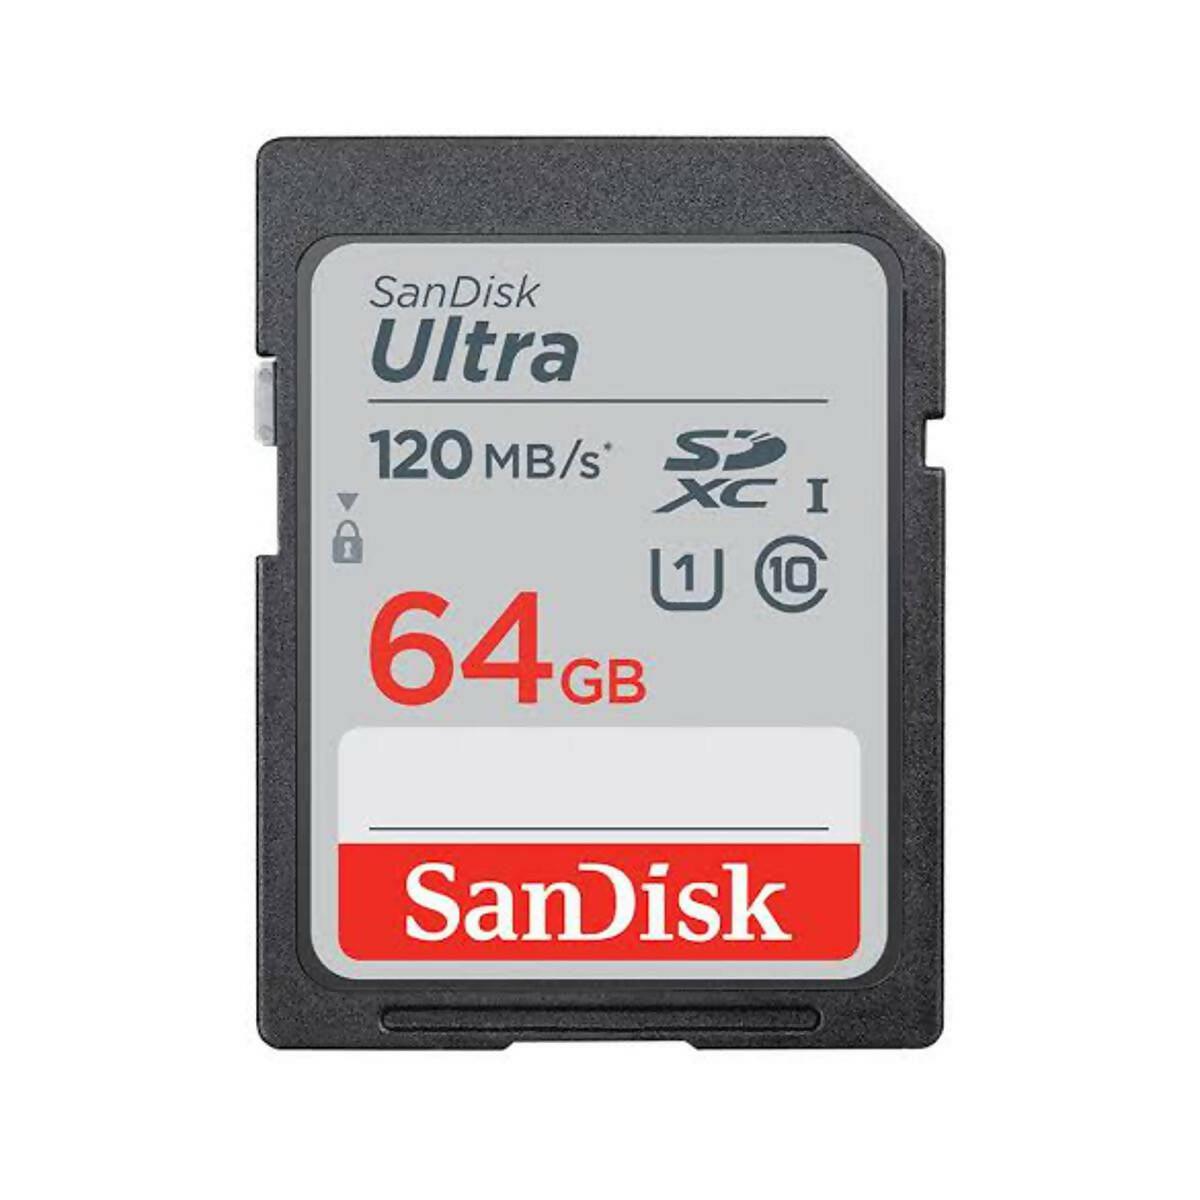 SanDisk Ultra 64GB MicroSD UHS-I 80Mb/S Memory Card